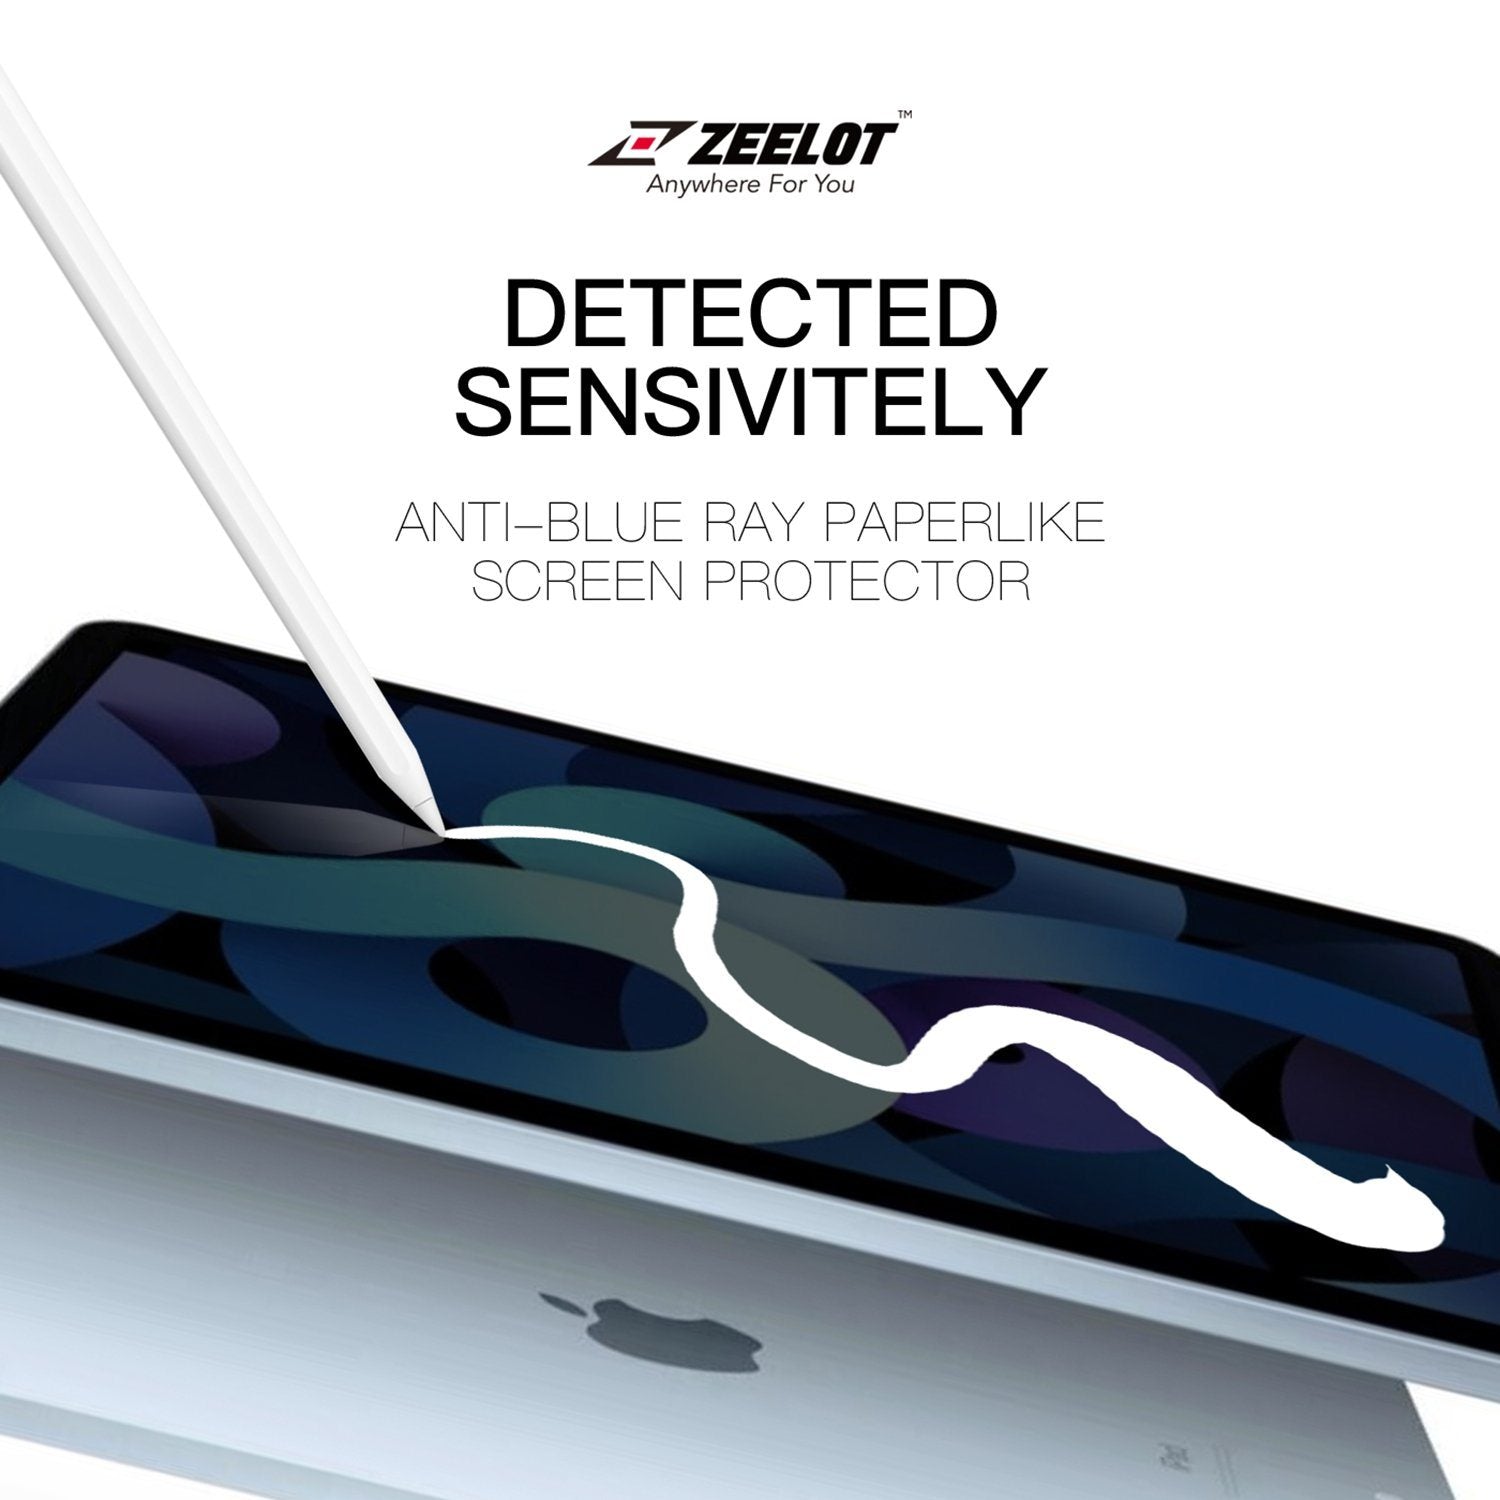 ZEELOT Anti Blue Ray Paper Like Screen Protector for iPad Pro 12.9"(2021/2018) Default Zeelot 